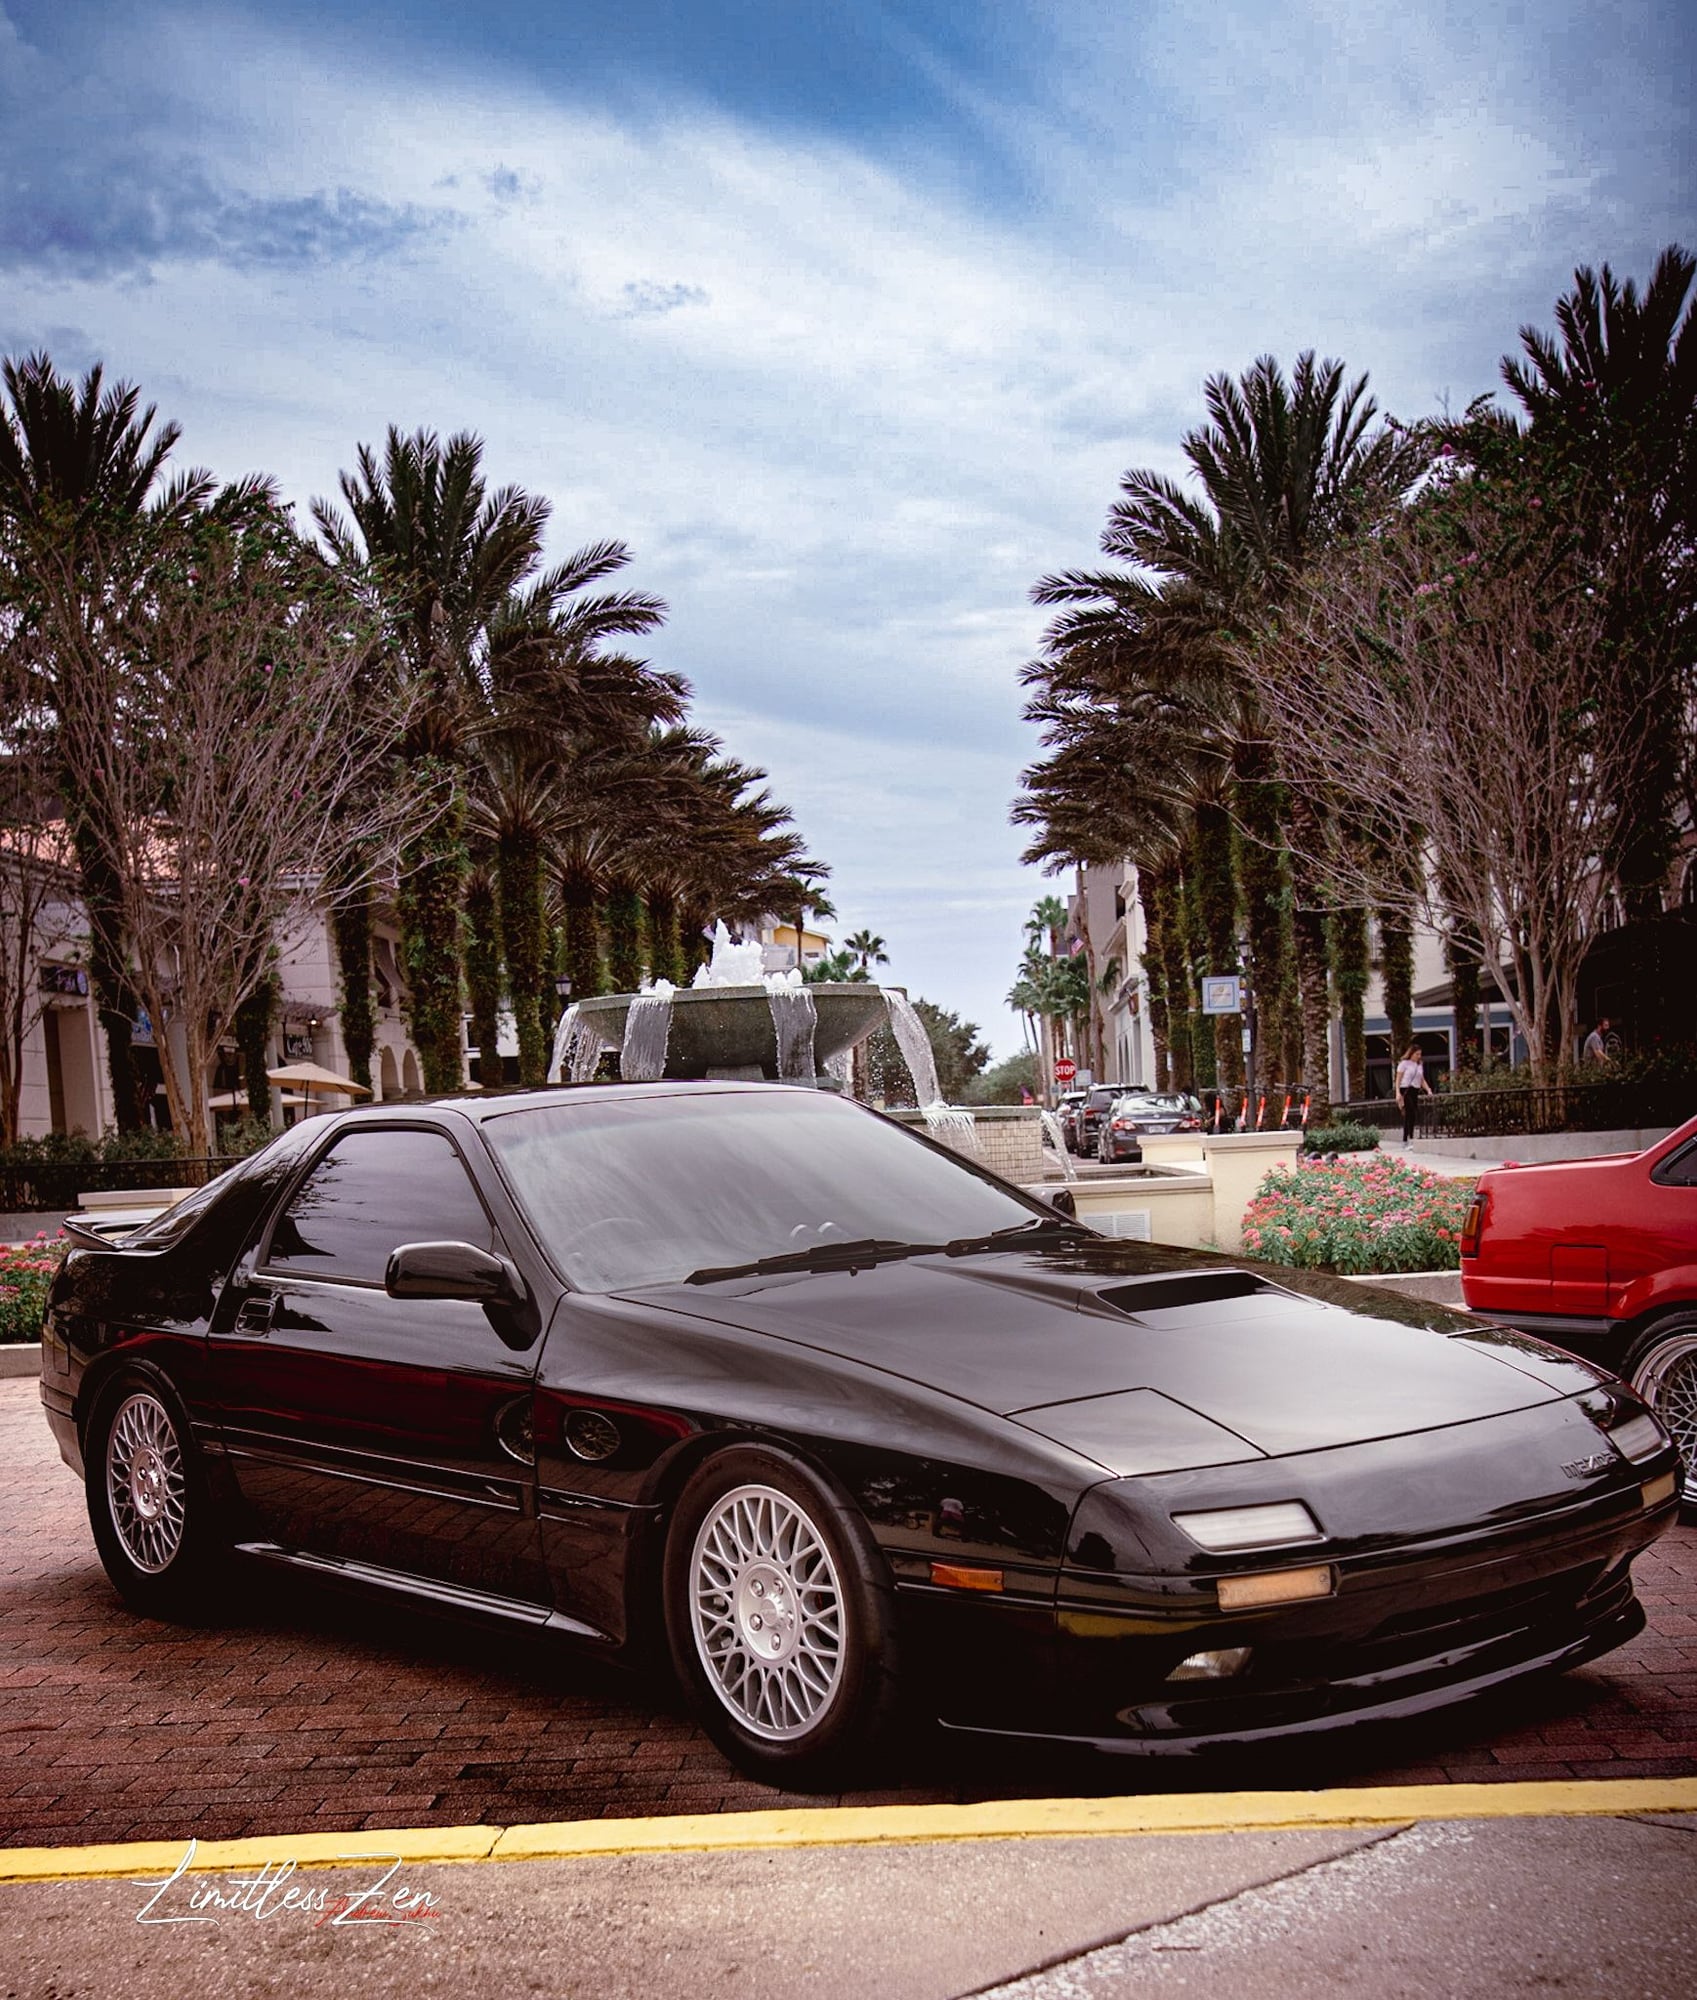 1991 Mazda RX-7 - Rx7 Savanna GTX 1991 85k miles - Used - VIN FC3S-242658 - 86,000 Miles - 2WD - Manual - Coupe - Black - Orange, CA 92867, United States